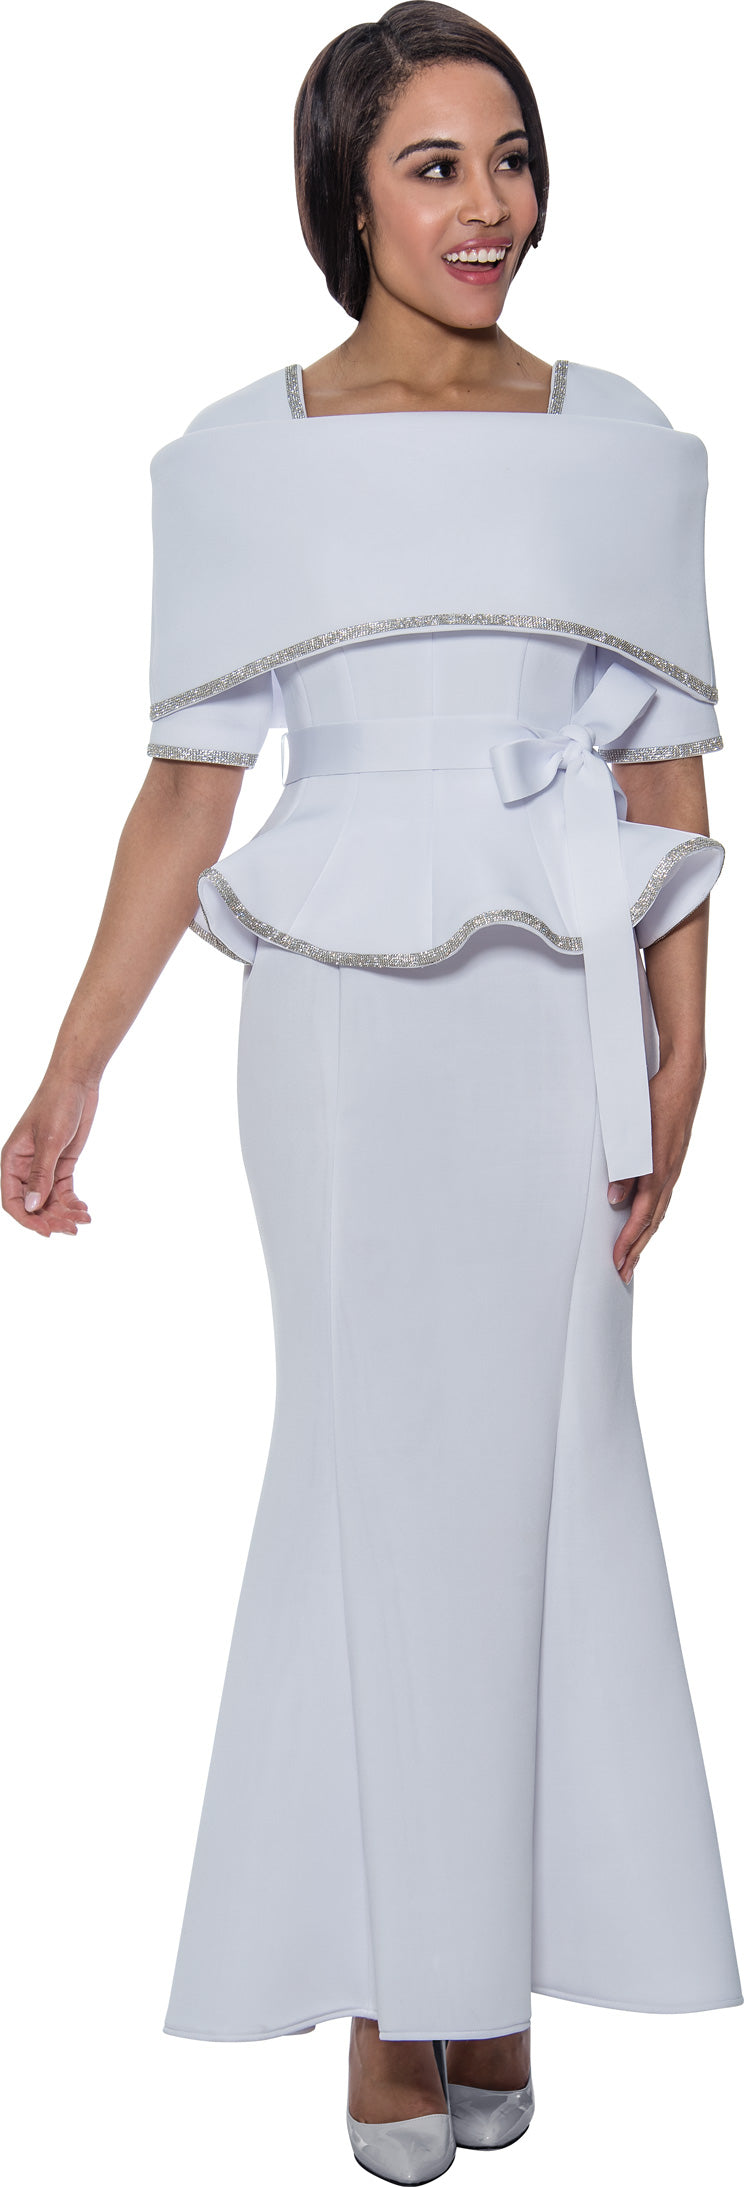 Plus Size Dresses Plus Size Mother of the Bride Peplum Long Dress White